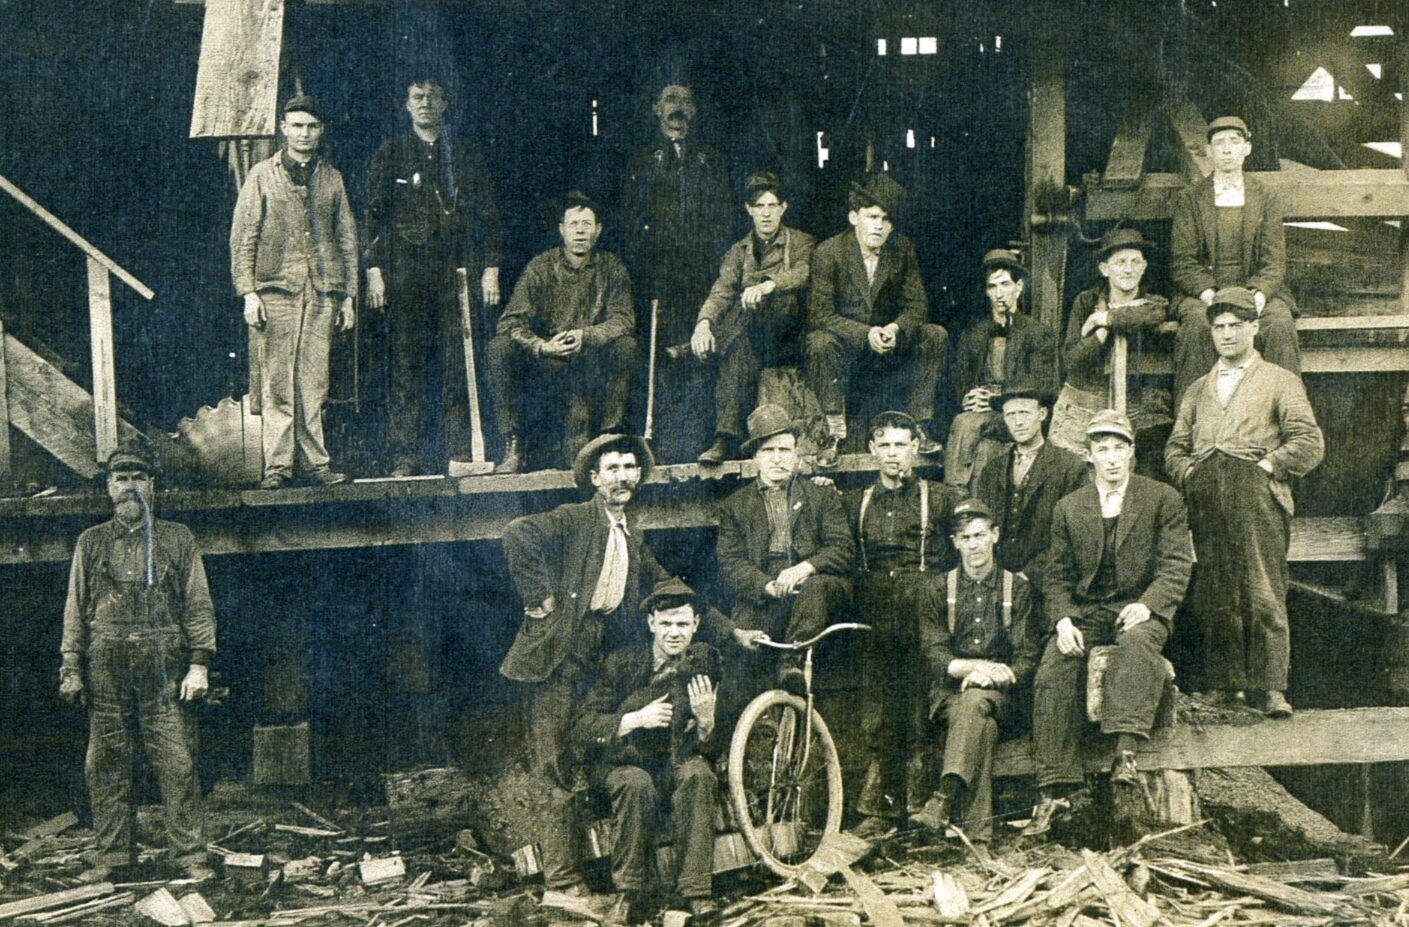 Men working at Union Mills